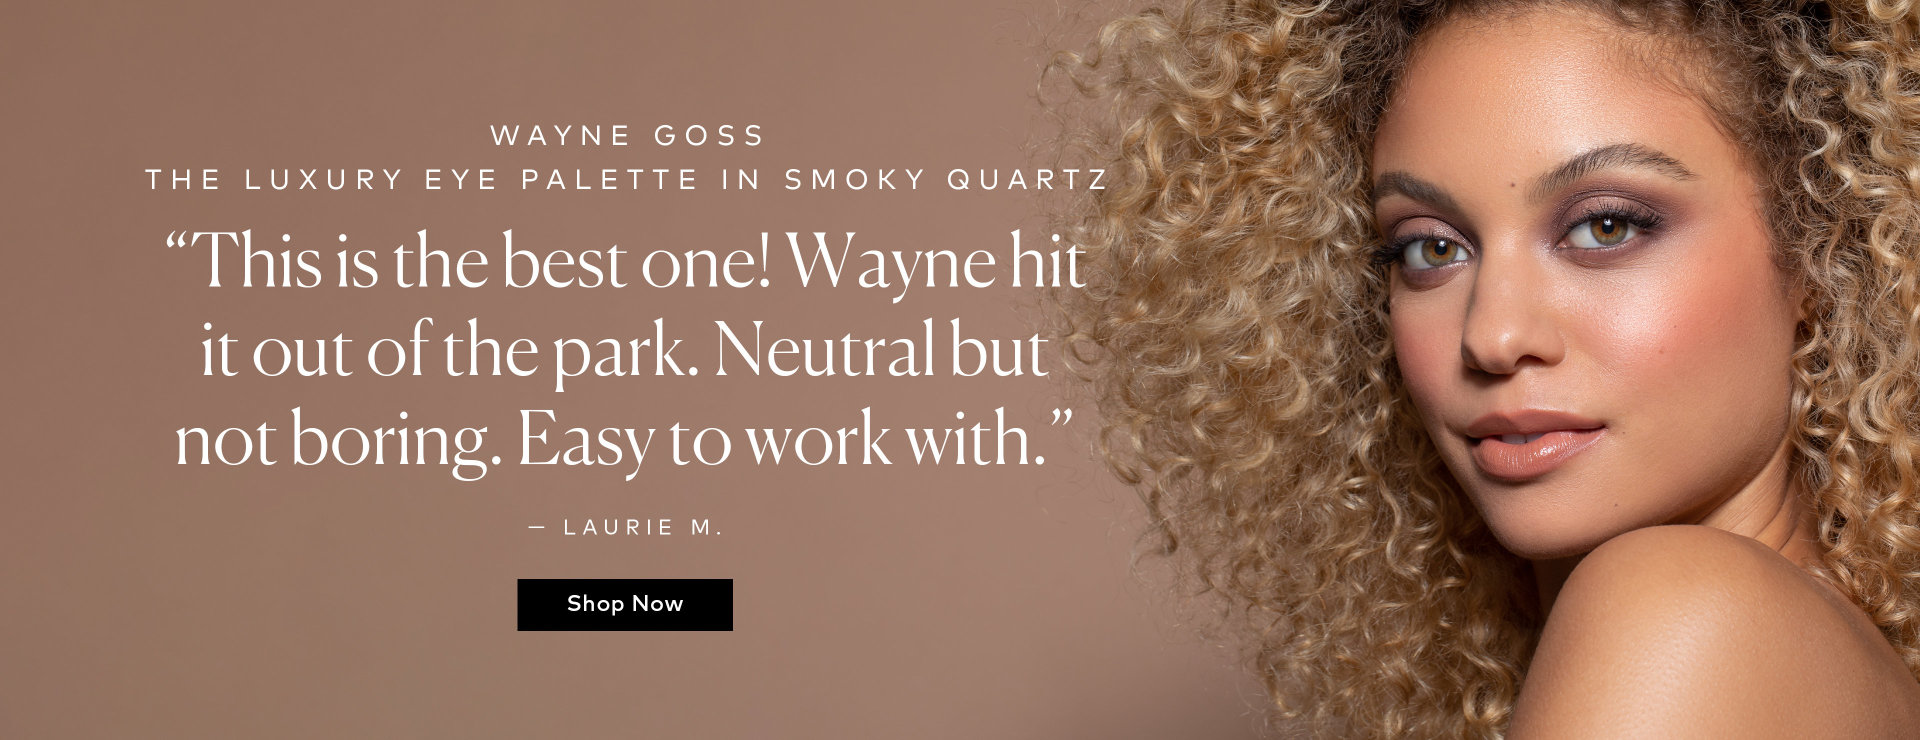 Shop the Wayne Goss Smoky Quartz Luxury Eye Palette on Beautylish.com